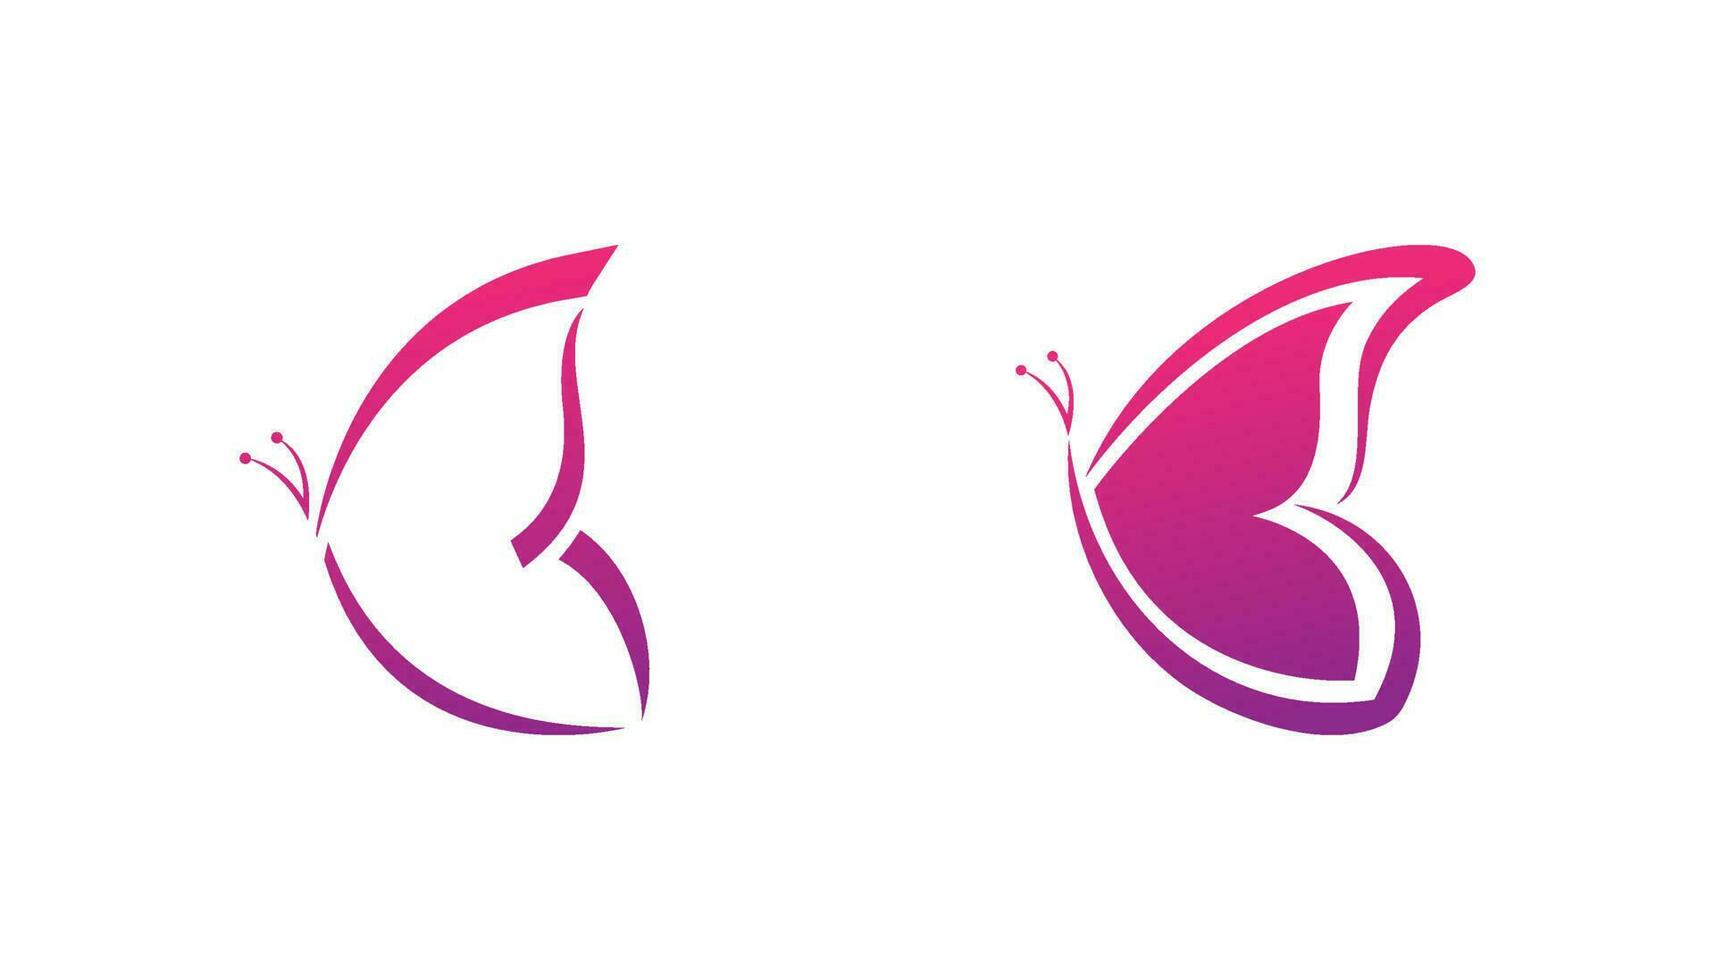 Butterfly logo vector design